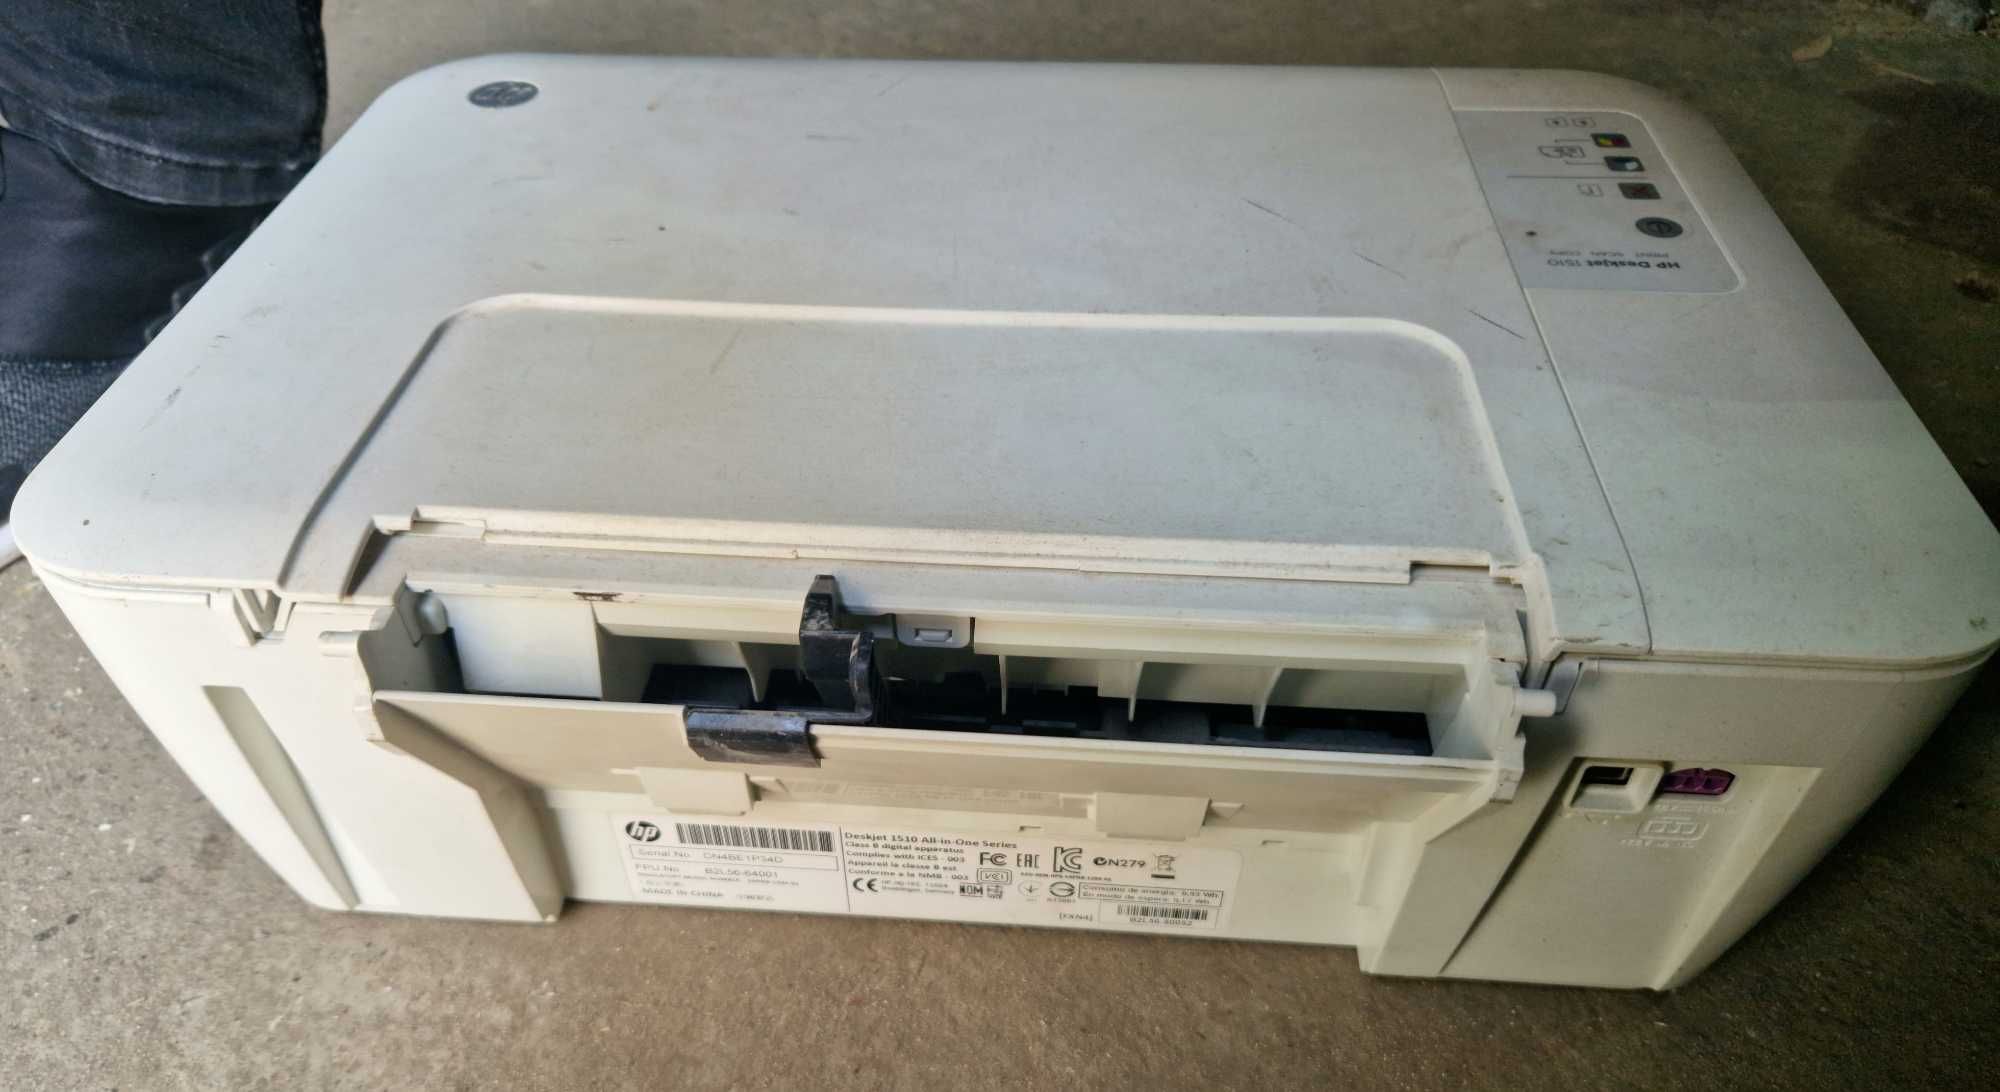 МФУ принтер сканер Hp deskjet 1510